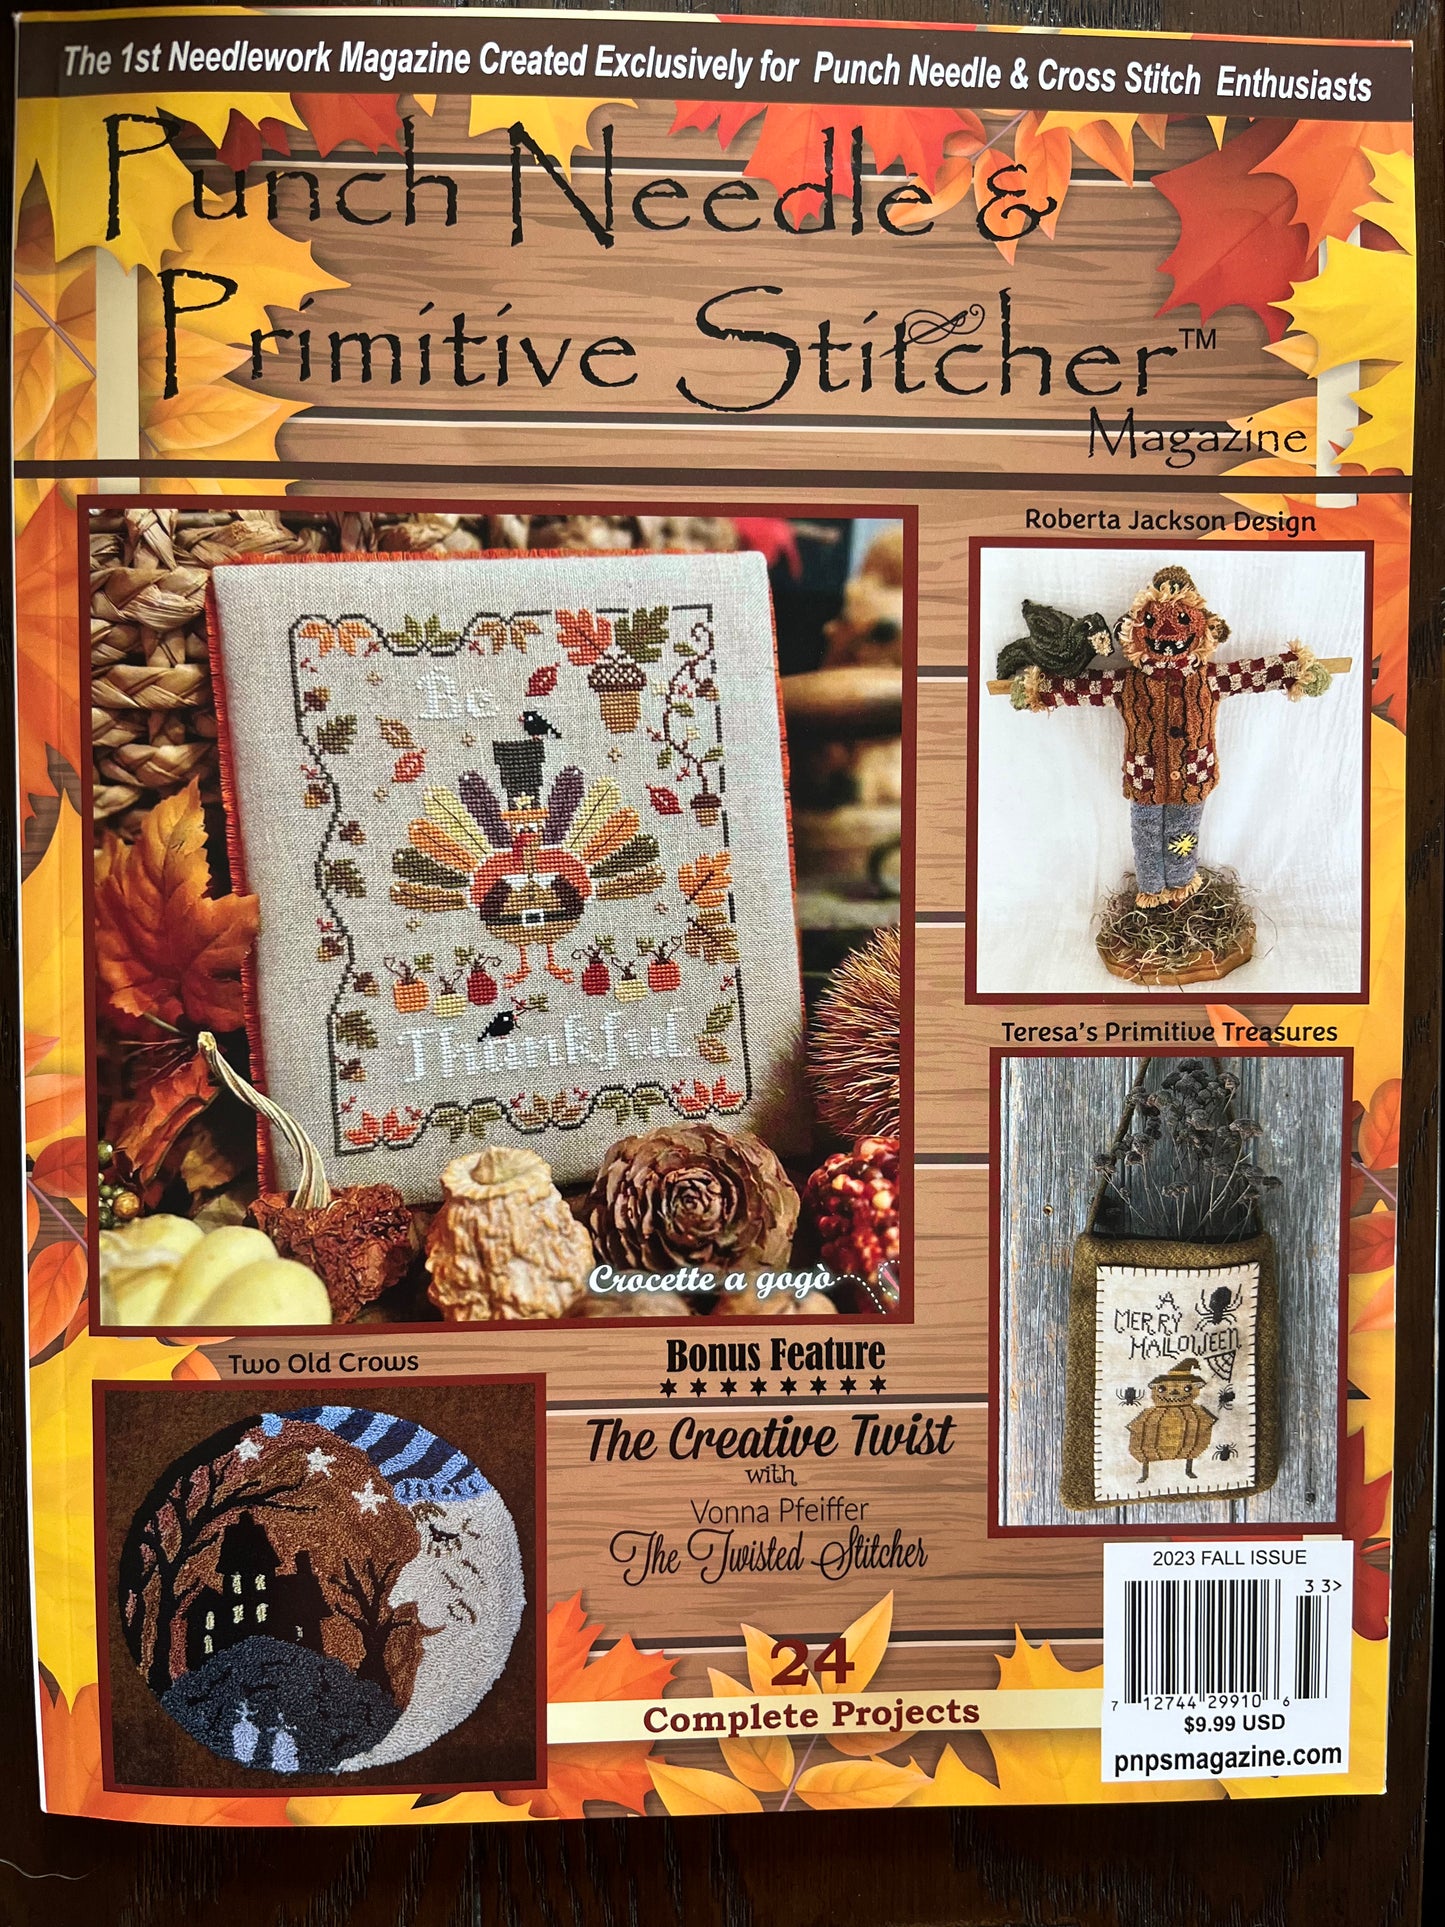 Punch Needle & Primitive Stitcher Magazine - Fall 2023 Issue!